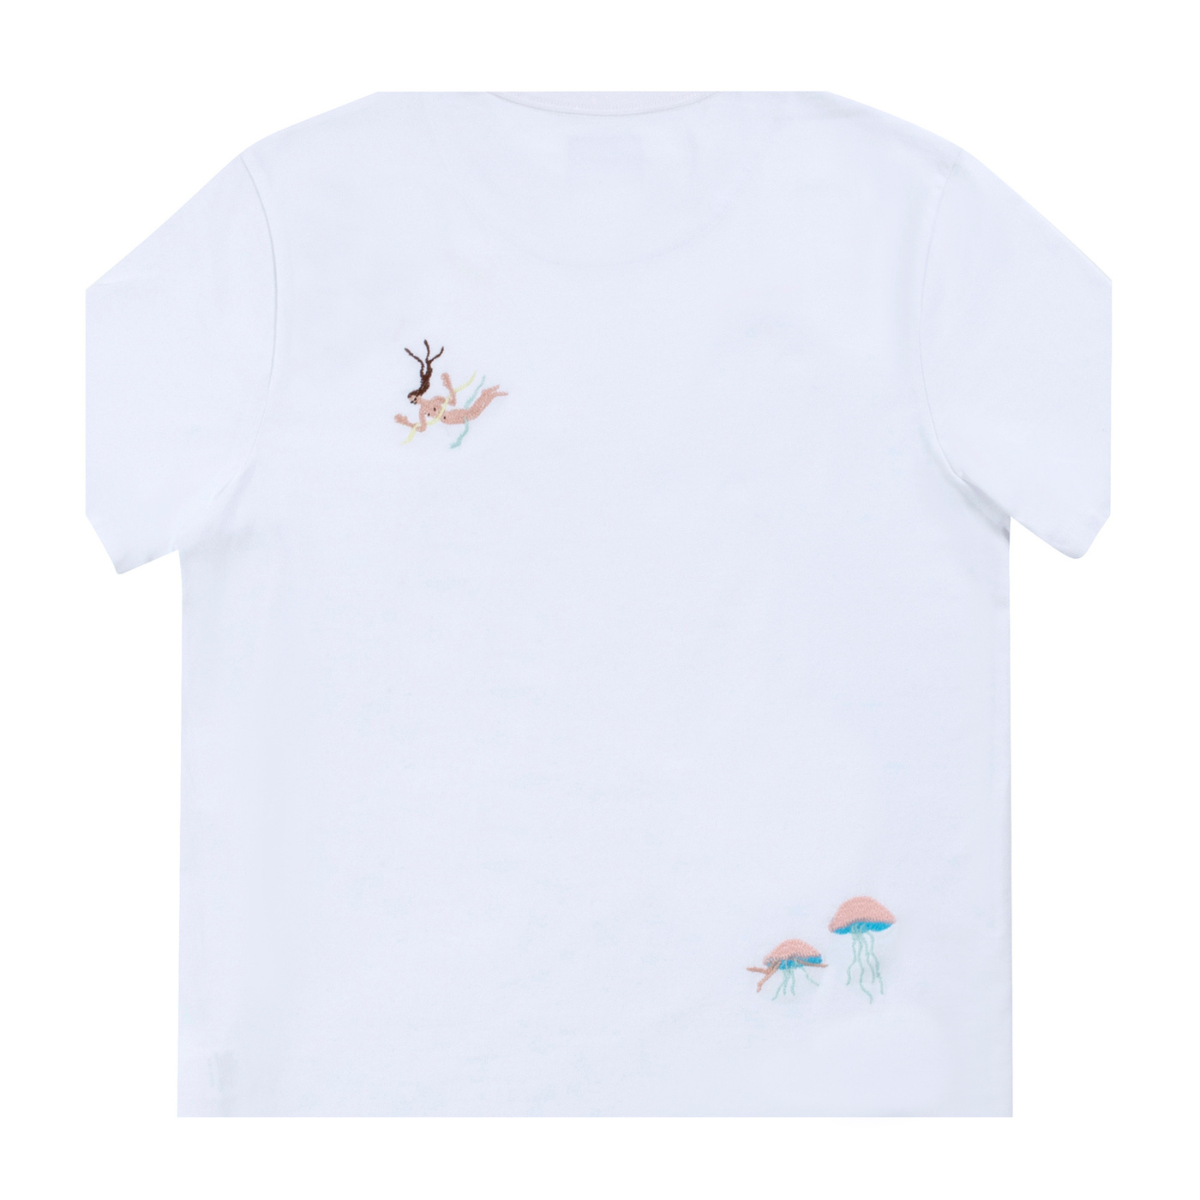 Embroidery T-shirt | Marlene Steyn / Abyssmistresses